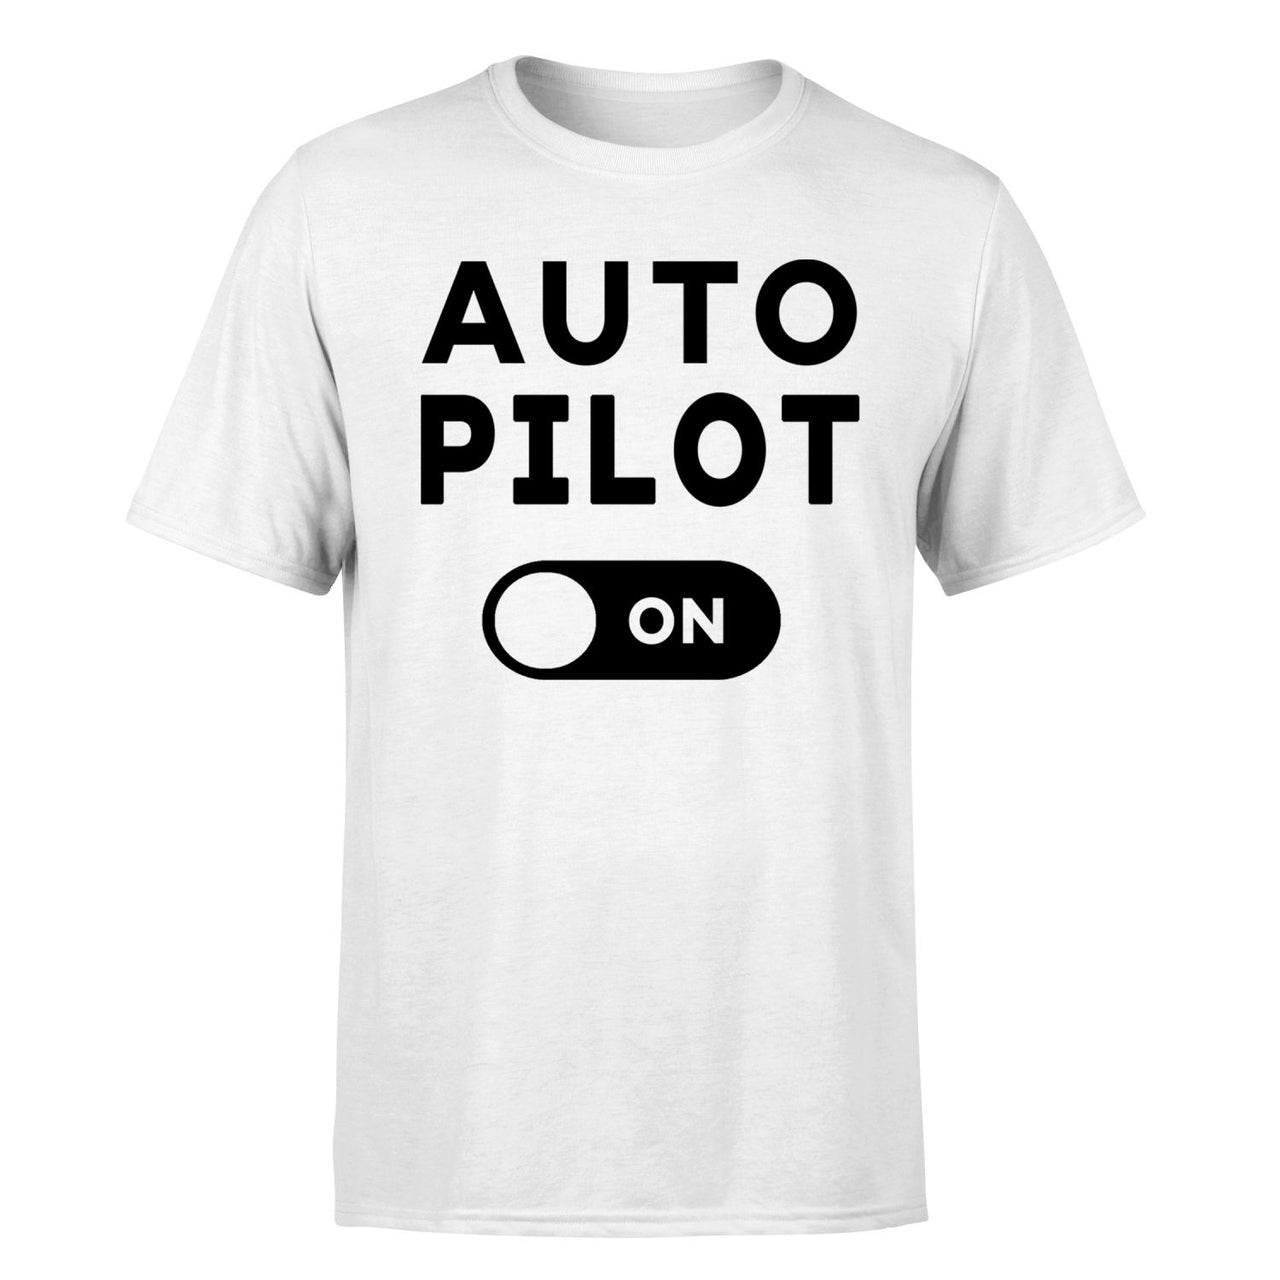 Auto Pilot ON Designed T-Shirts